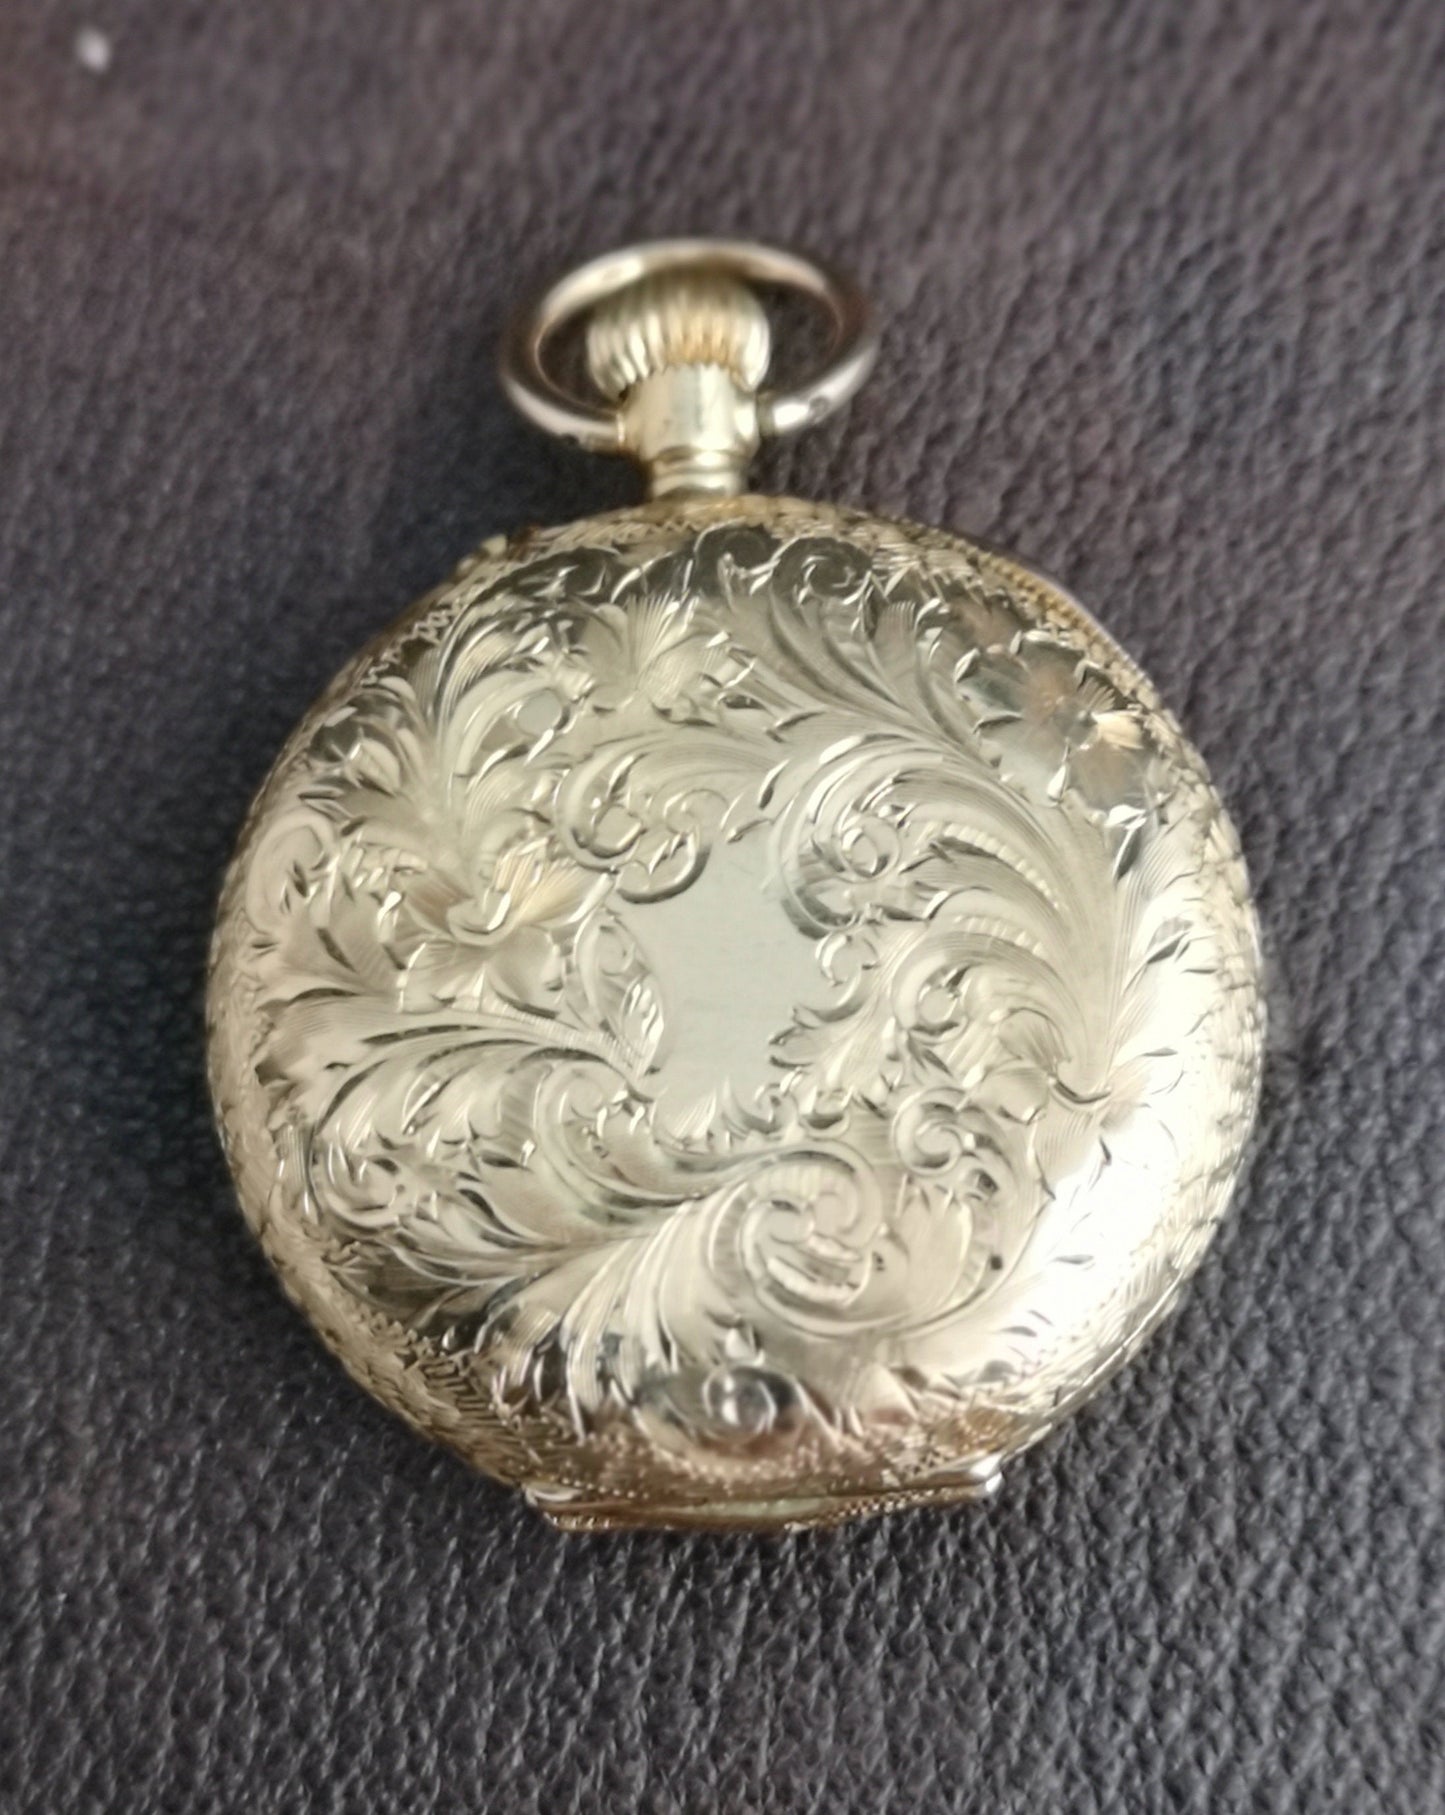 Antique gold pocket watch, 14ct fob watch